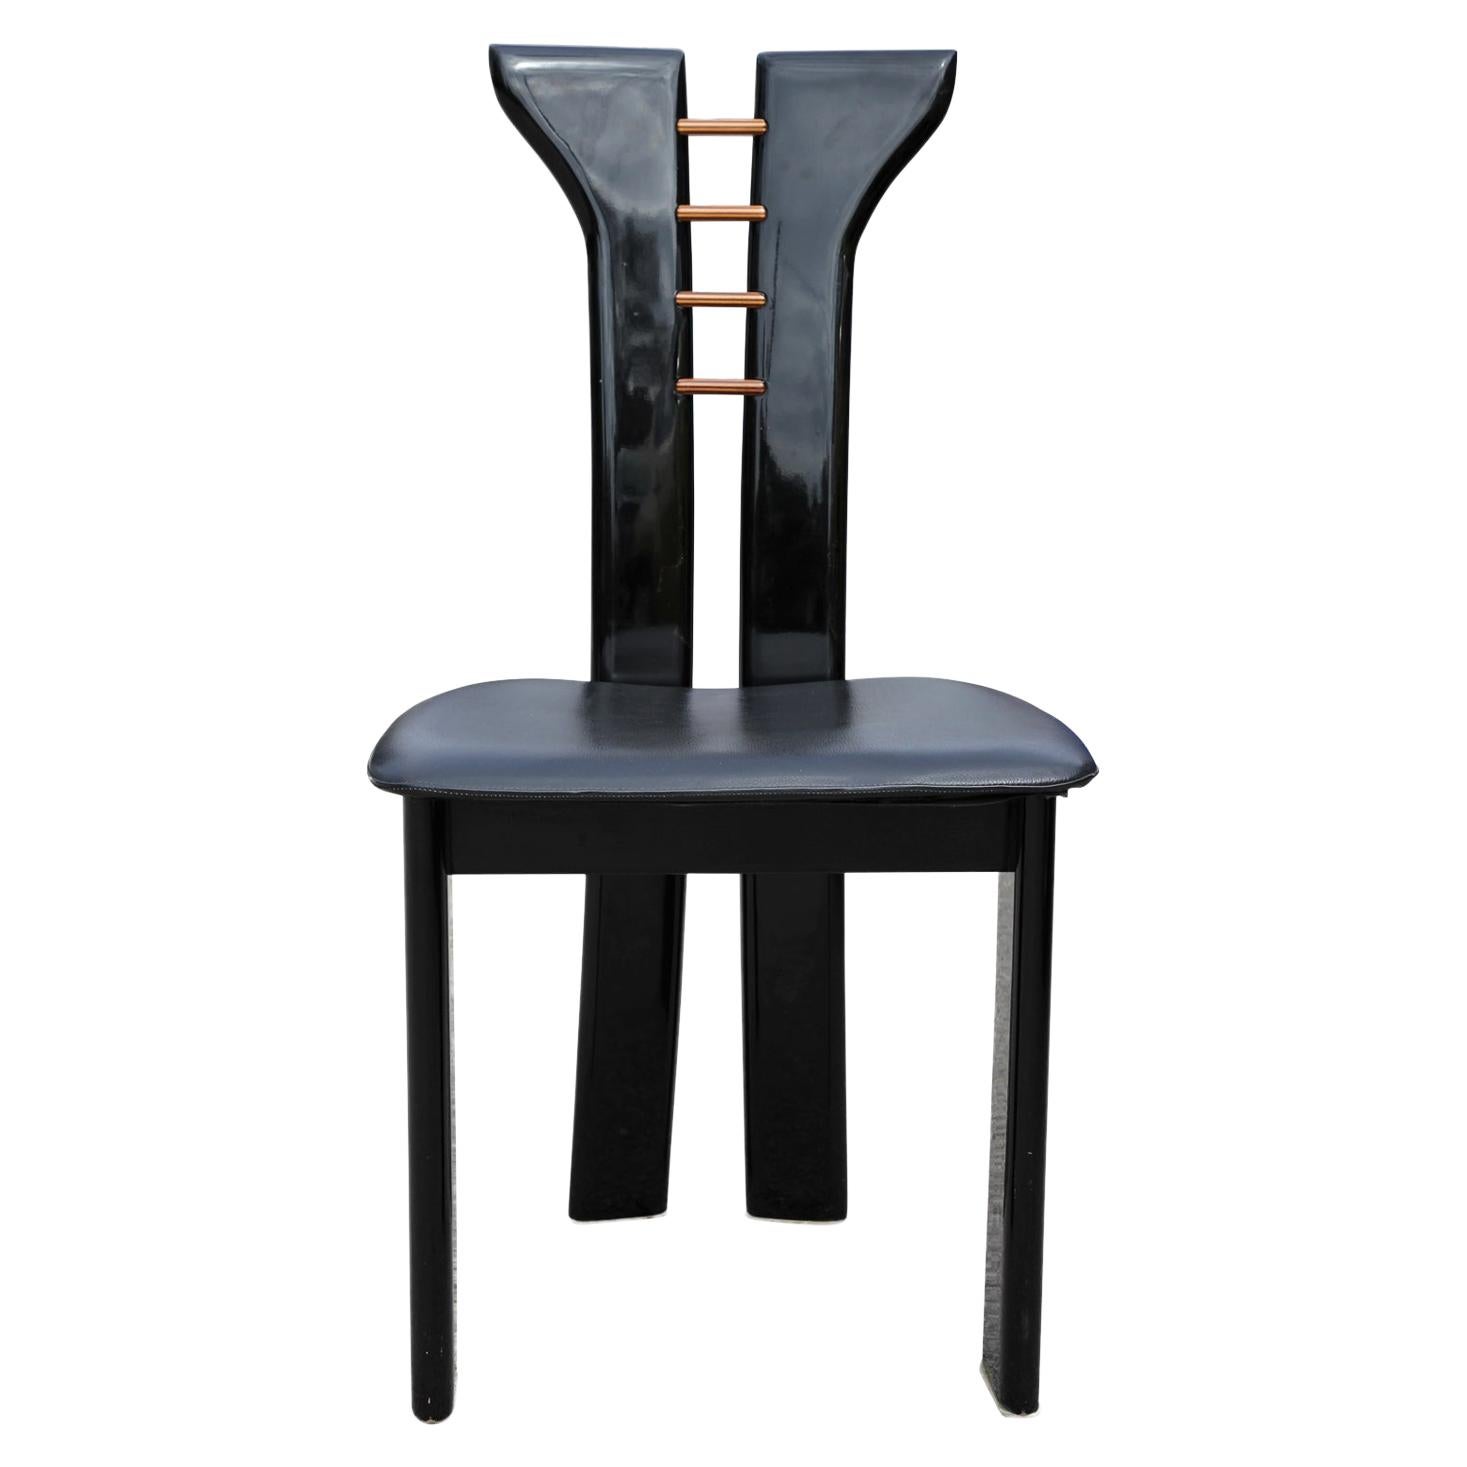 Set of 10 Italian Gloss Black Modern Dining Chairs Roche Bobois Pierre Cardin